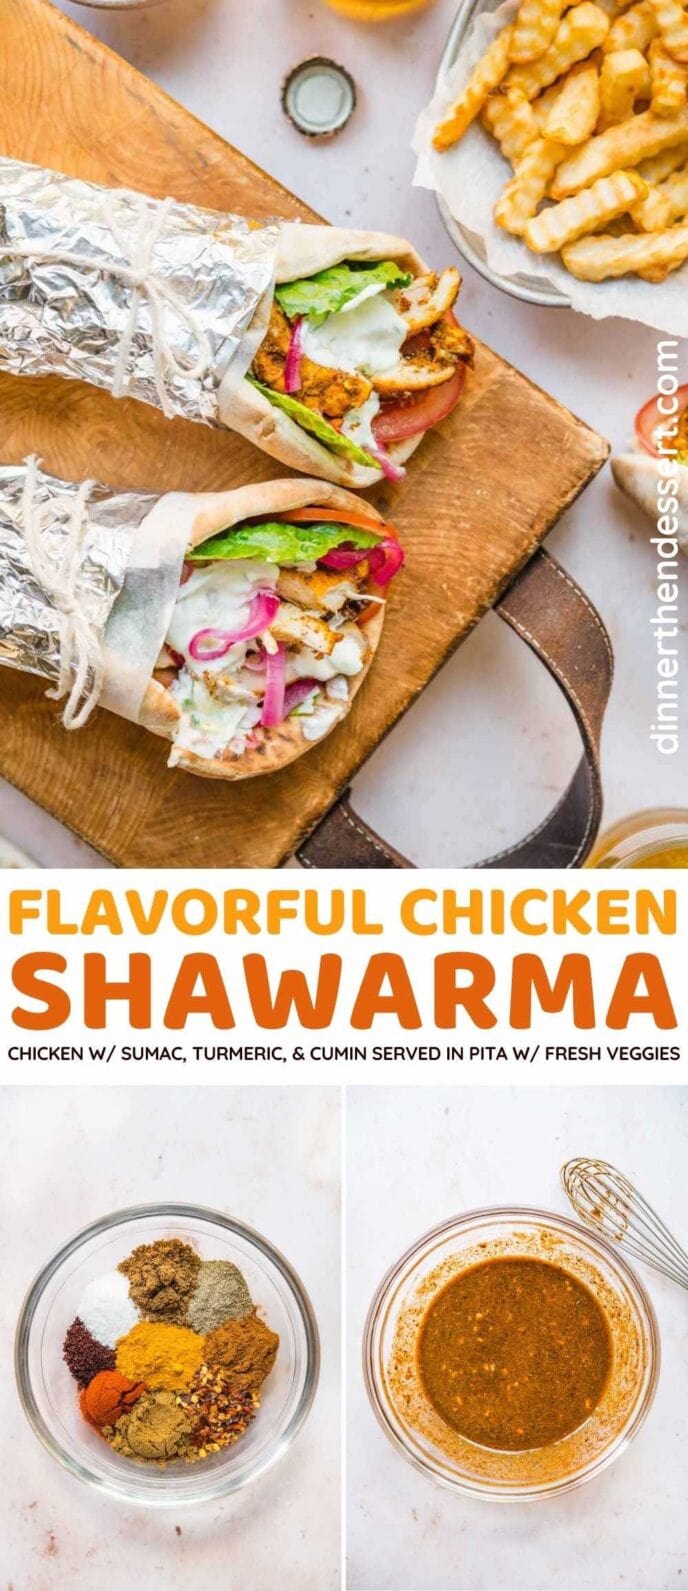 Chicken Shawarma collage